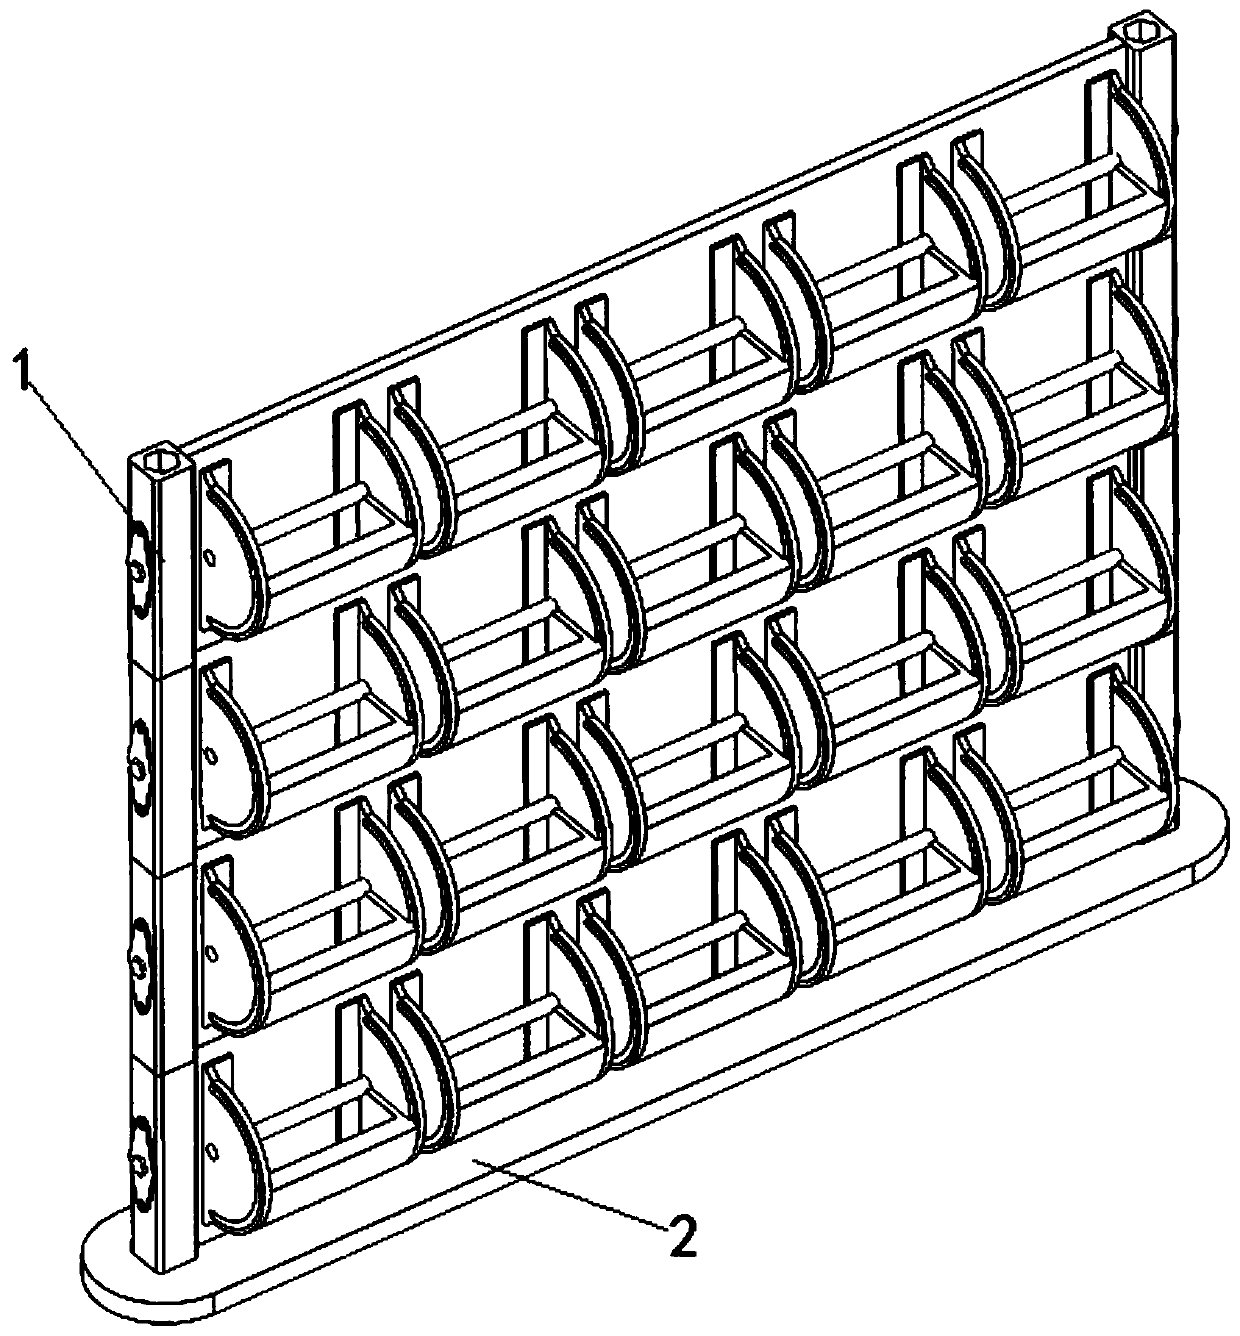 A generator set assembly tool storage rack